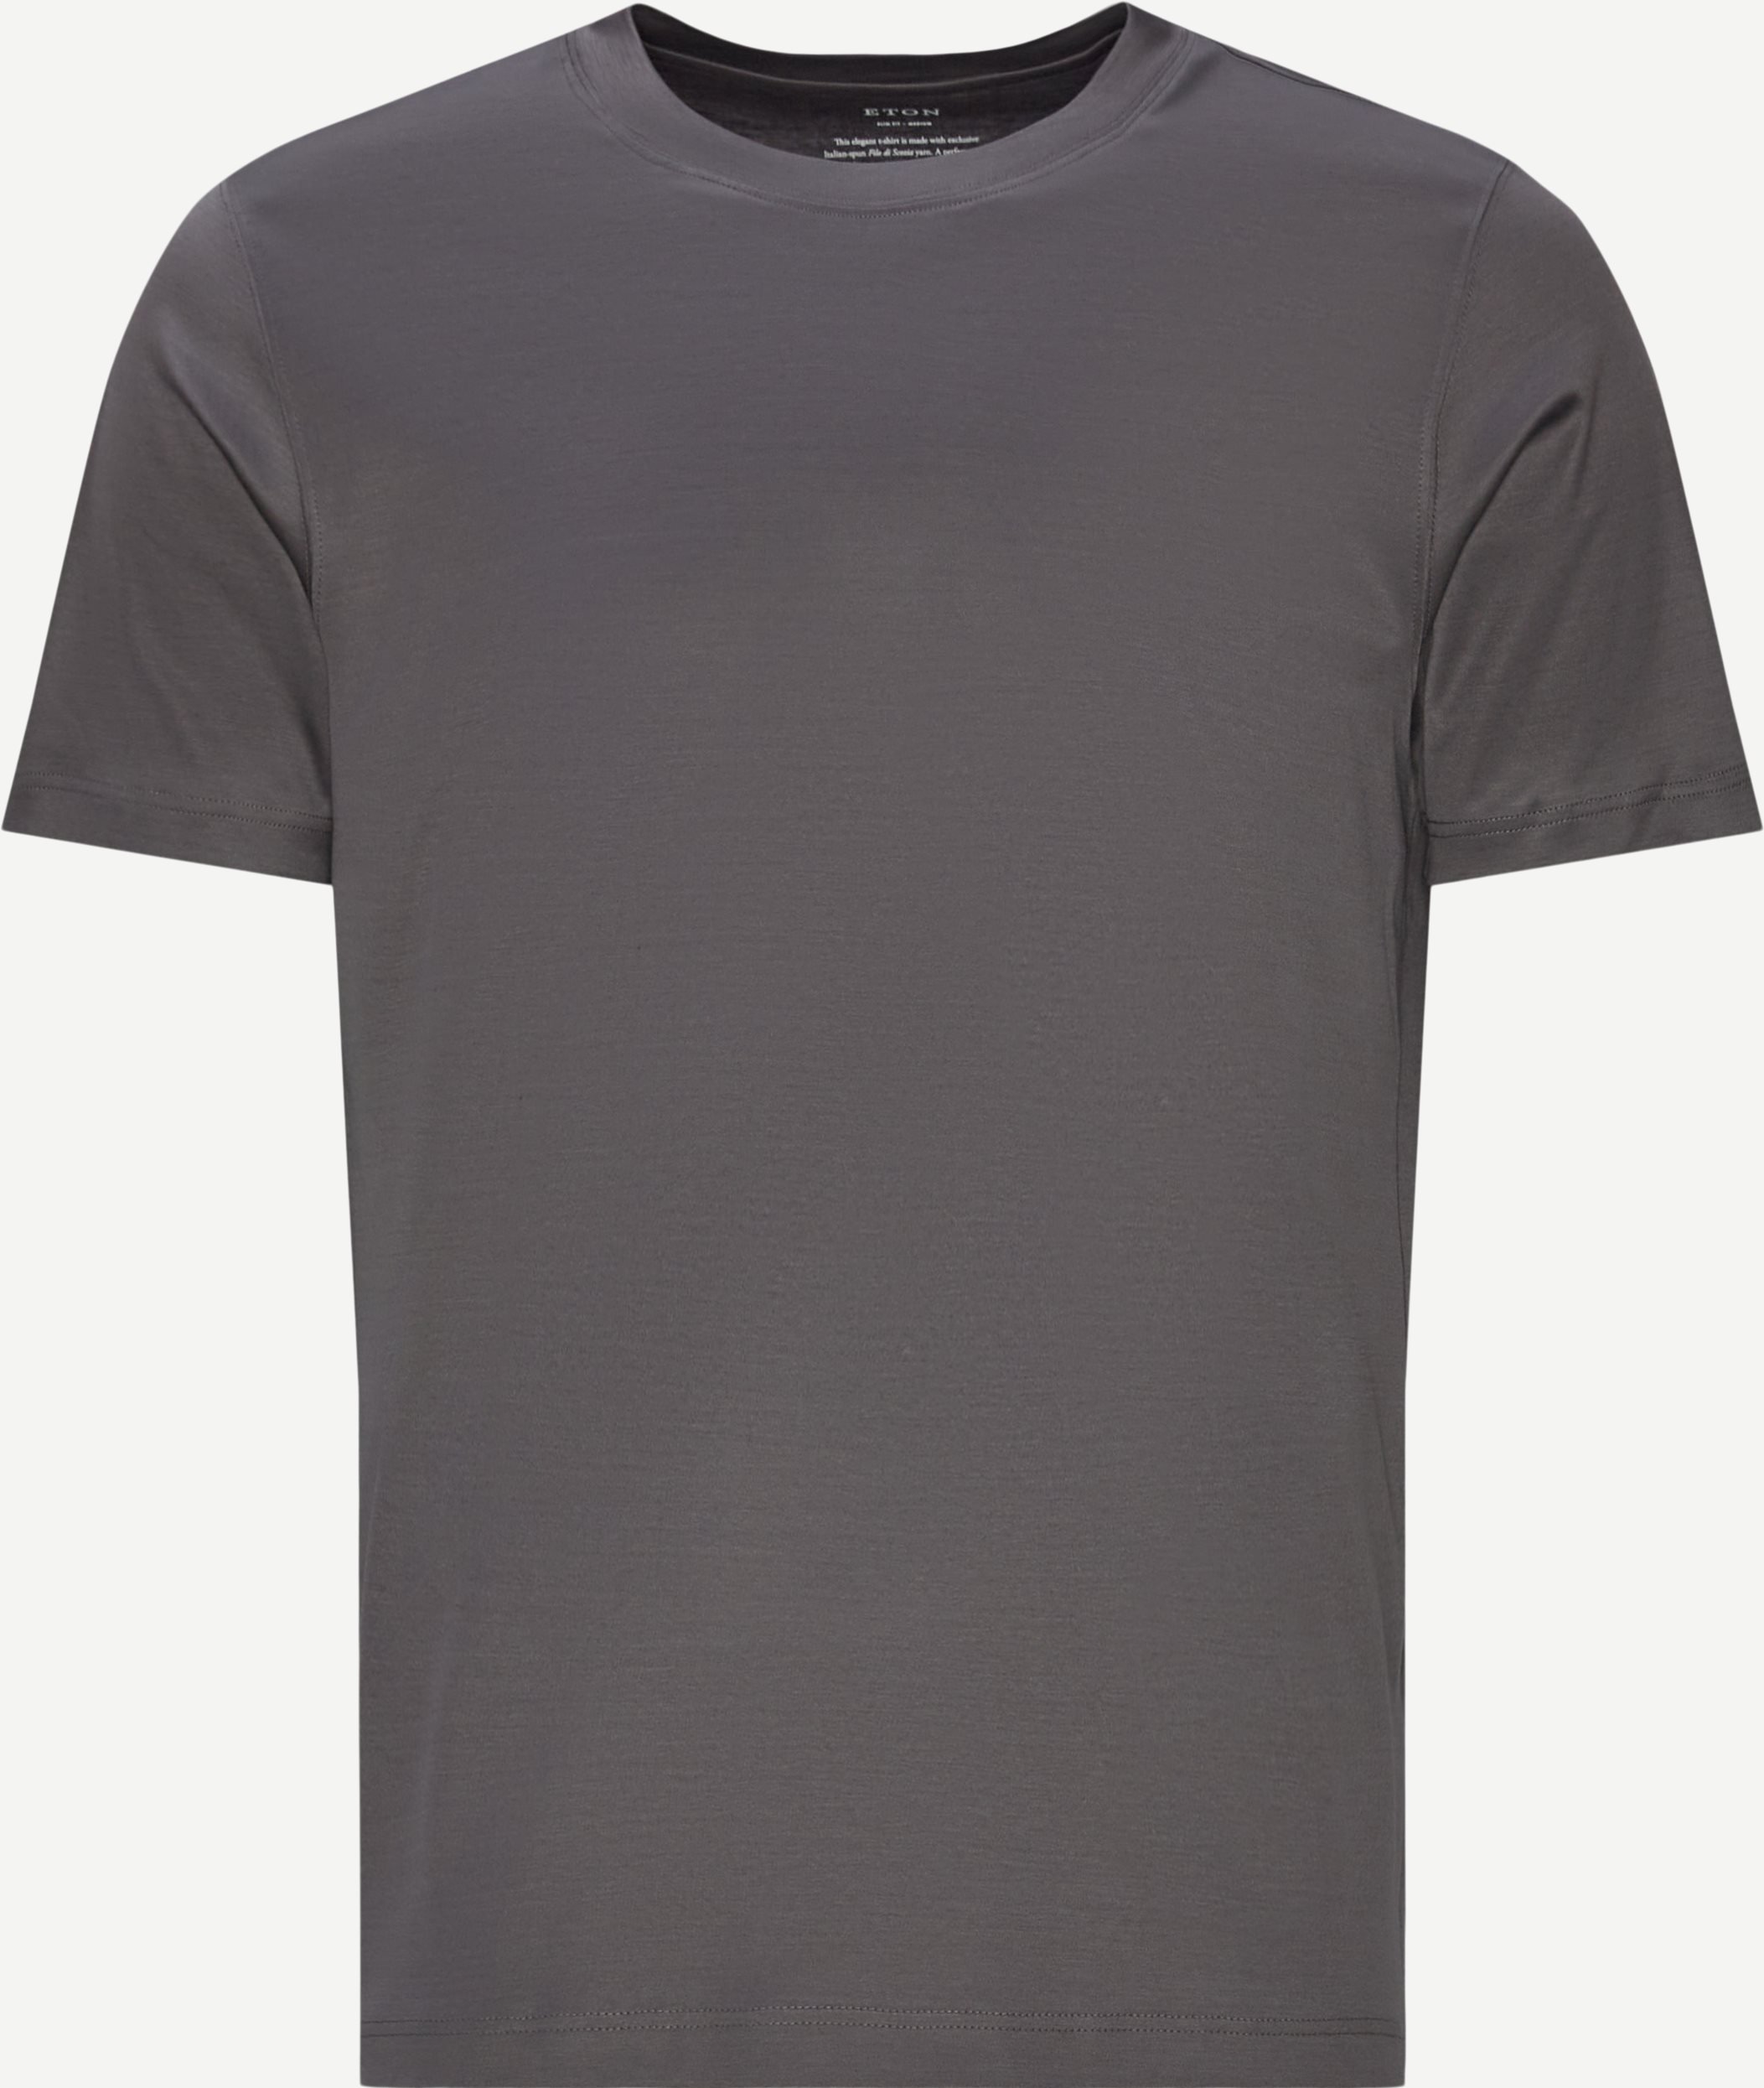 0592 T-shirt - T-shirts - Slim fit - Grå